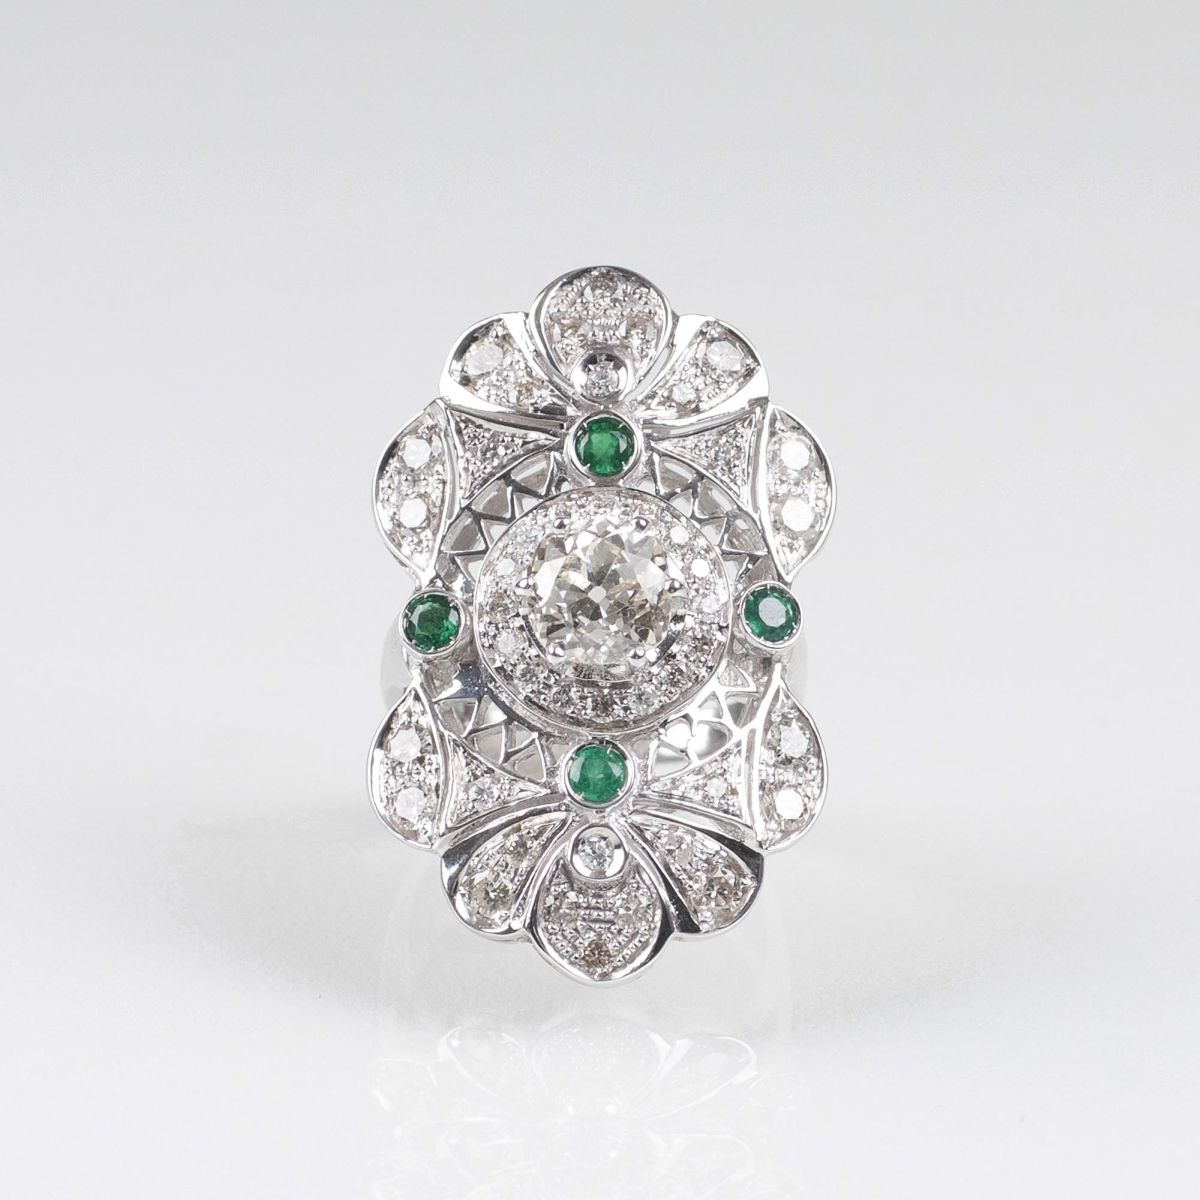 Großer Brillant-Smaragd-Ring mit Altschliff-Solitär - Bild 2